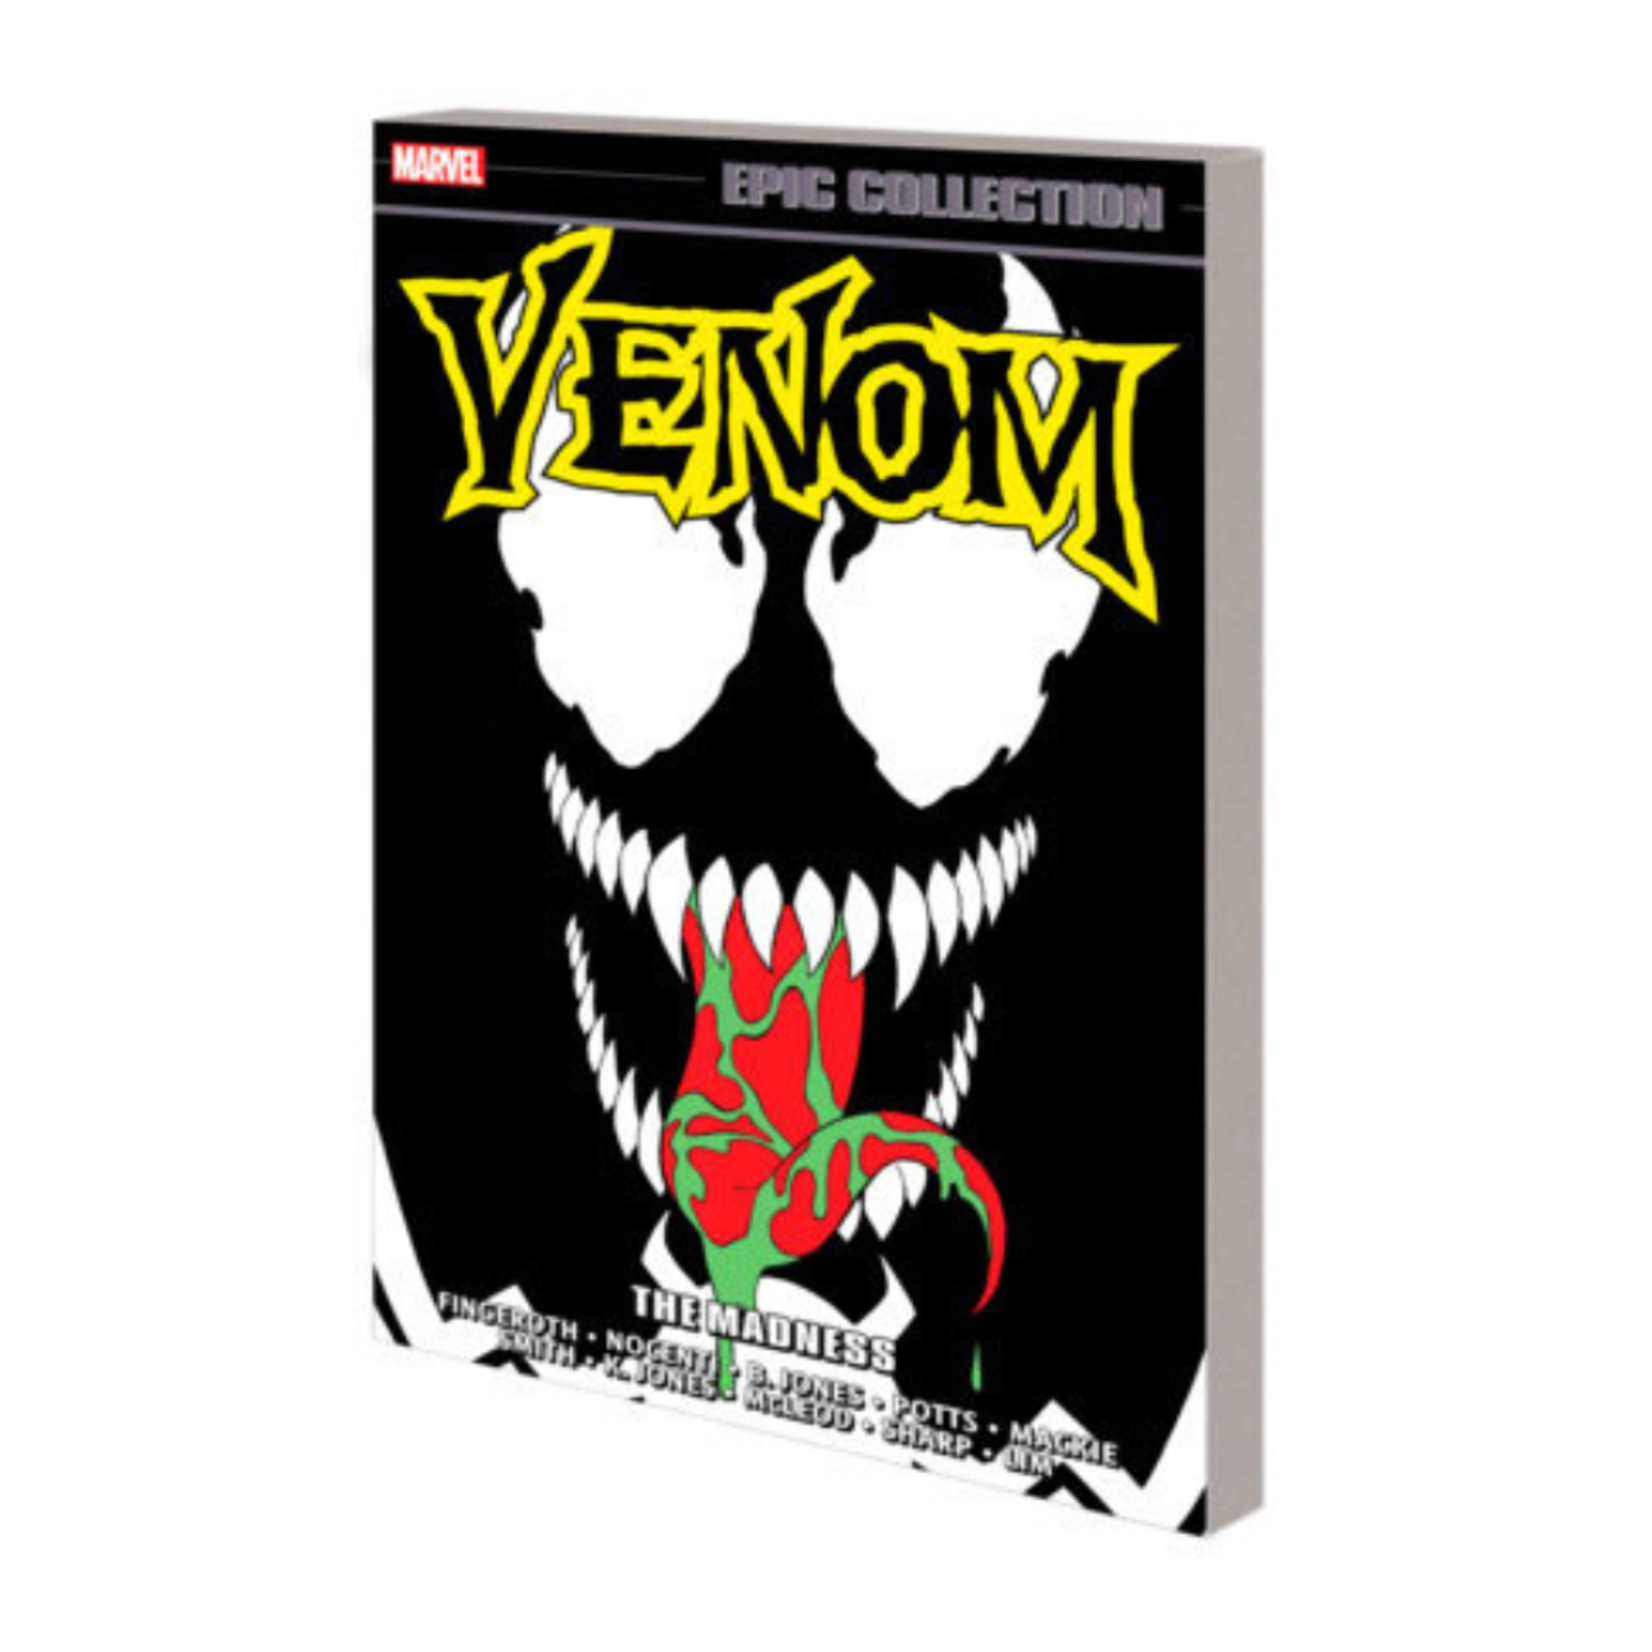 Marvel Comics Venom Epic Collection TP Vol 04 The Madness